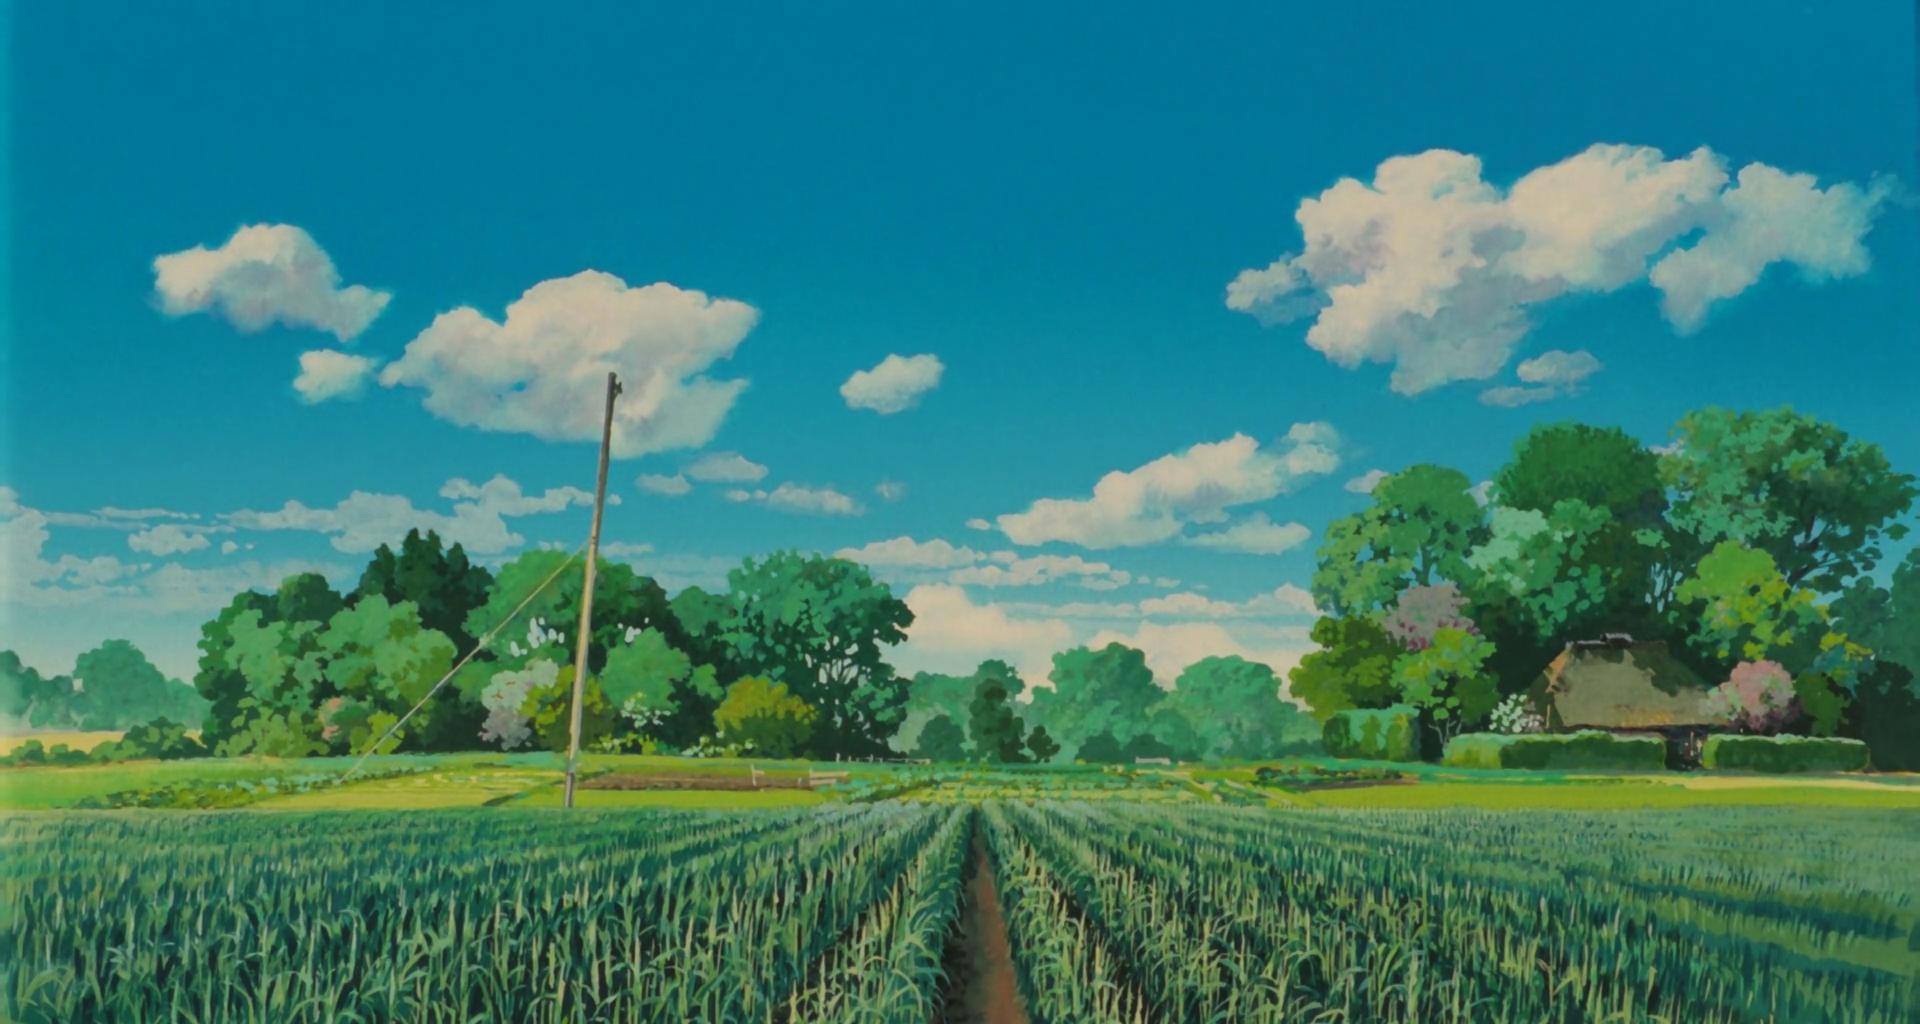 Studio Ghibli Scenery Wallpaper Free Studio Ghibli Scenery Background